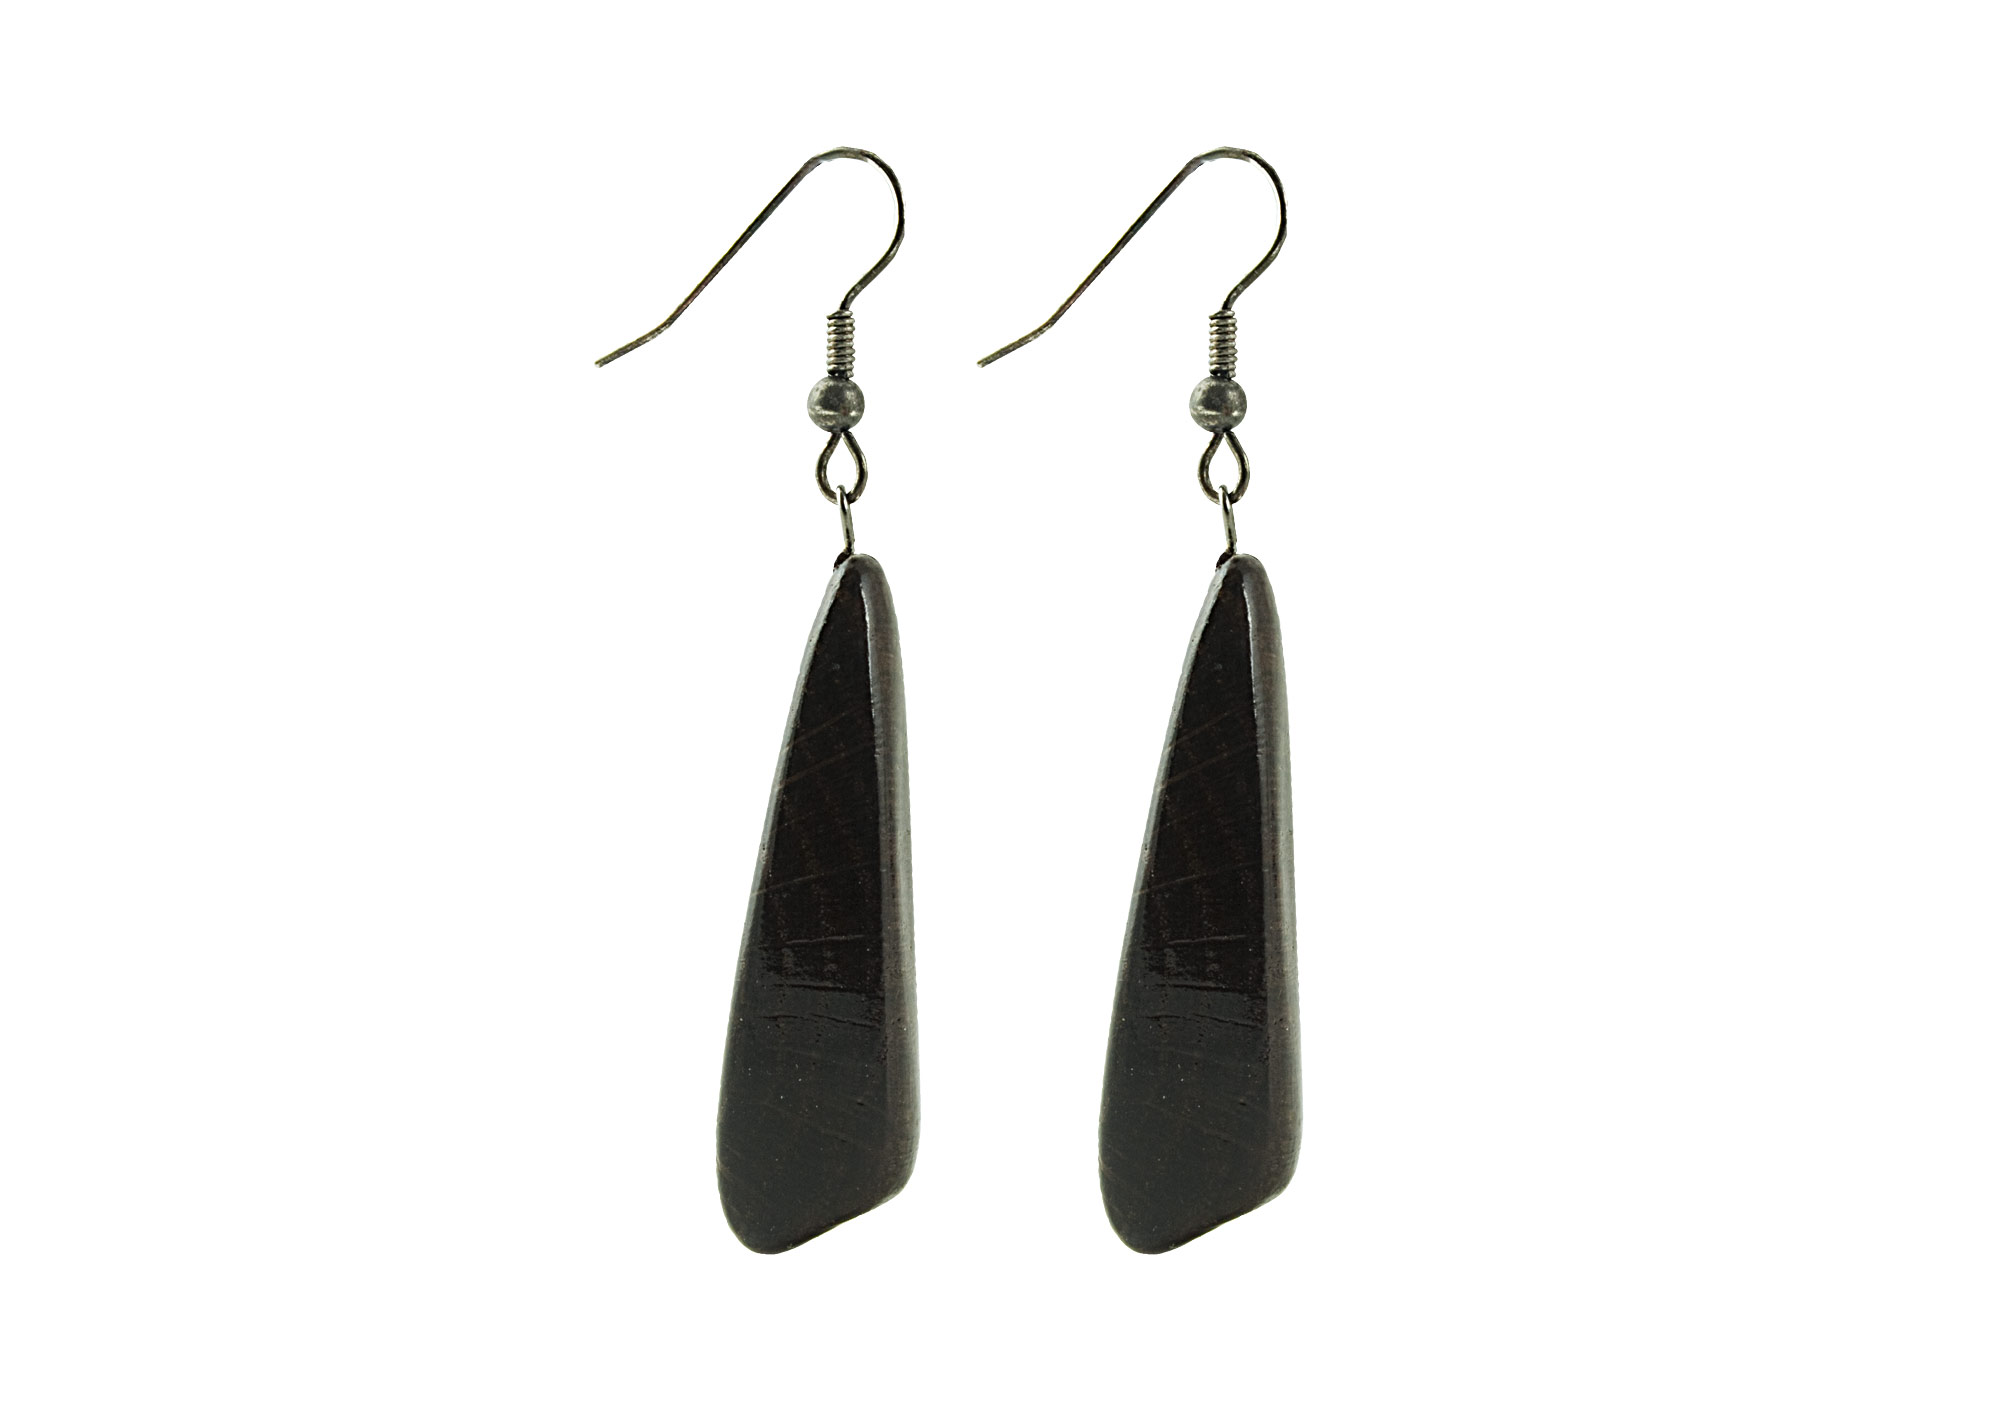 Buy Black Sea Wooden Earrings Asymmetrical Dark Approx at GoldenCockerel.com